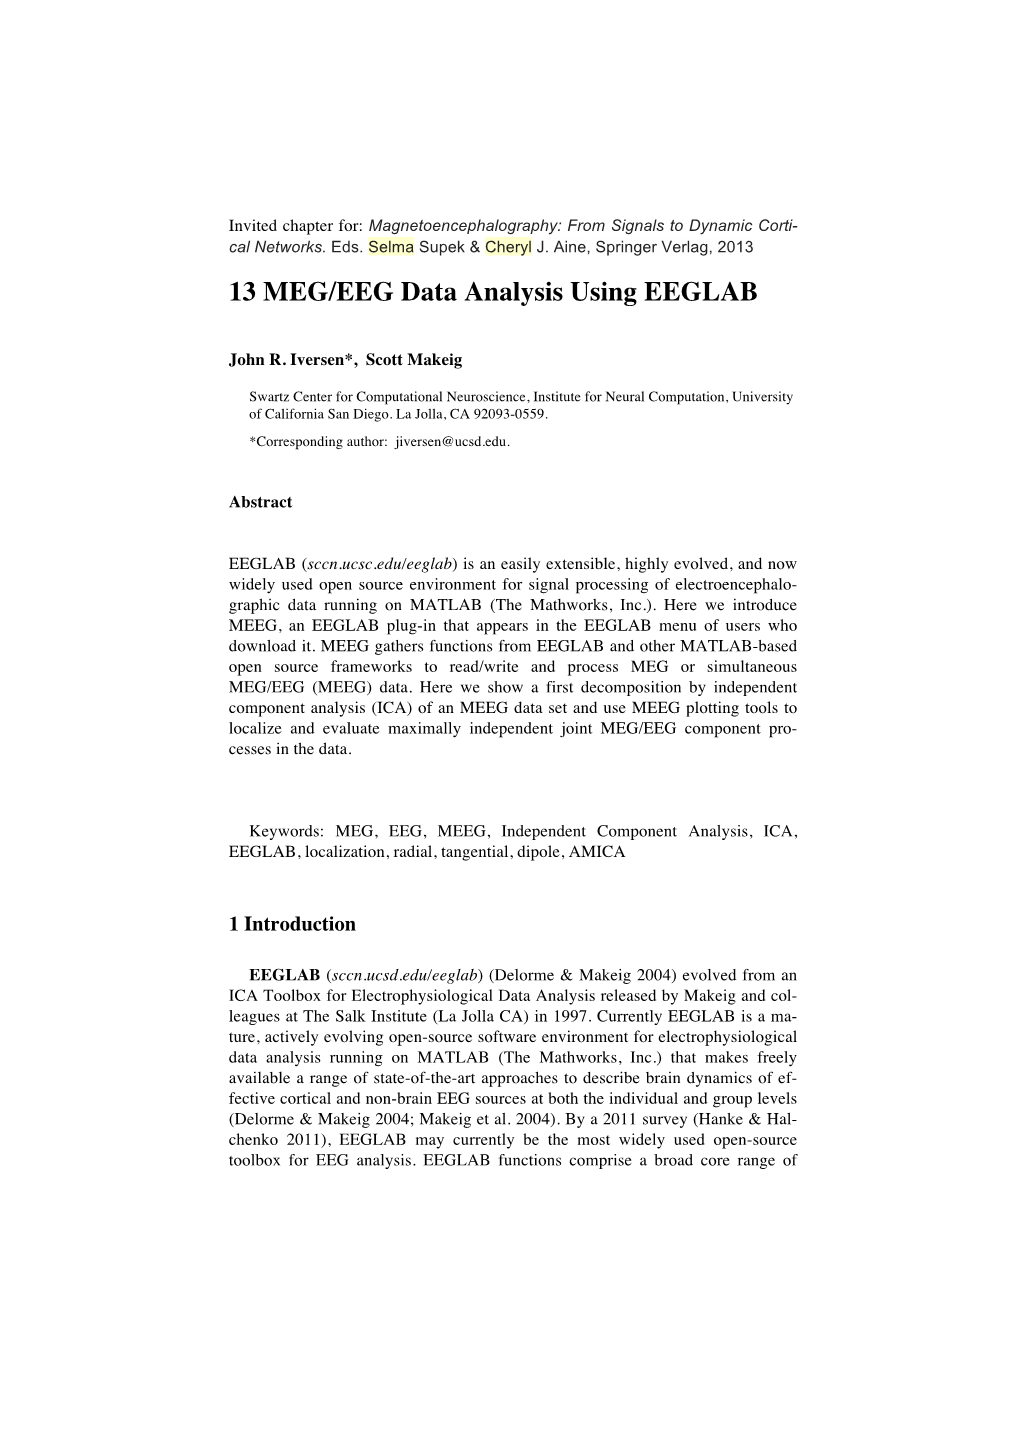 13 MEG/EEG Data Analysis Using EEGLAB